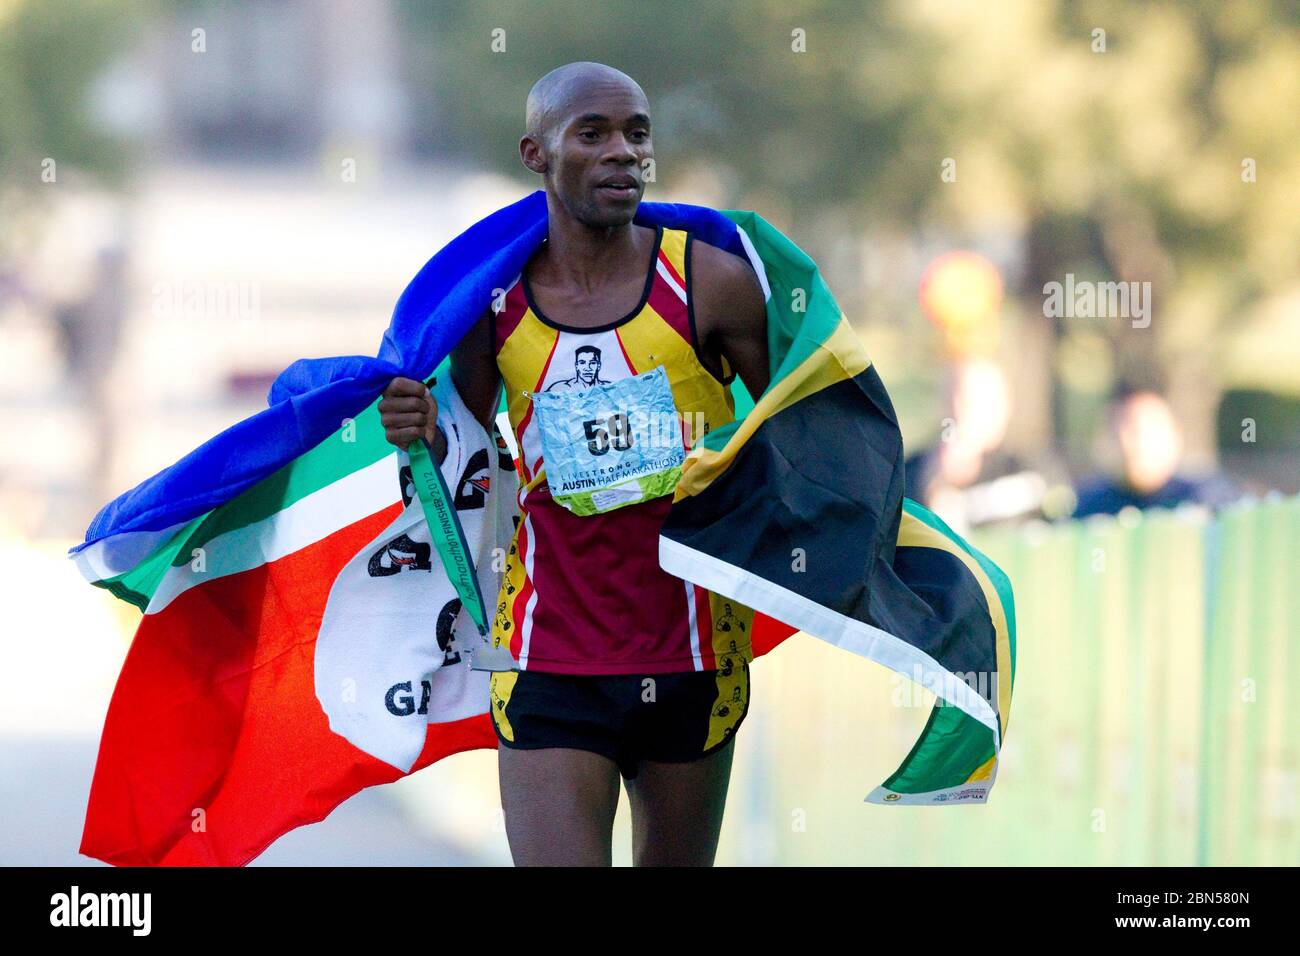 Austin, Texas USA, February 19, 2012: Siyabonga Nkonde of Durban, South Africa wins the men's half marathon at the 22nd annual Austin Marathon and Half Marathon. ©Bob Daemmrich Stock Photo